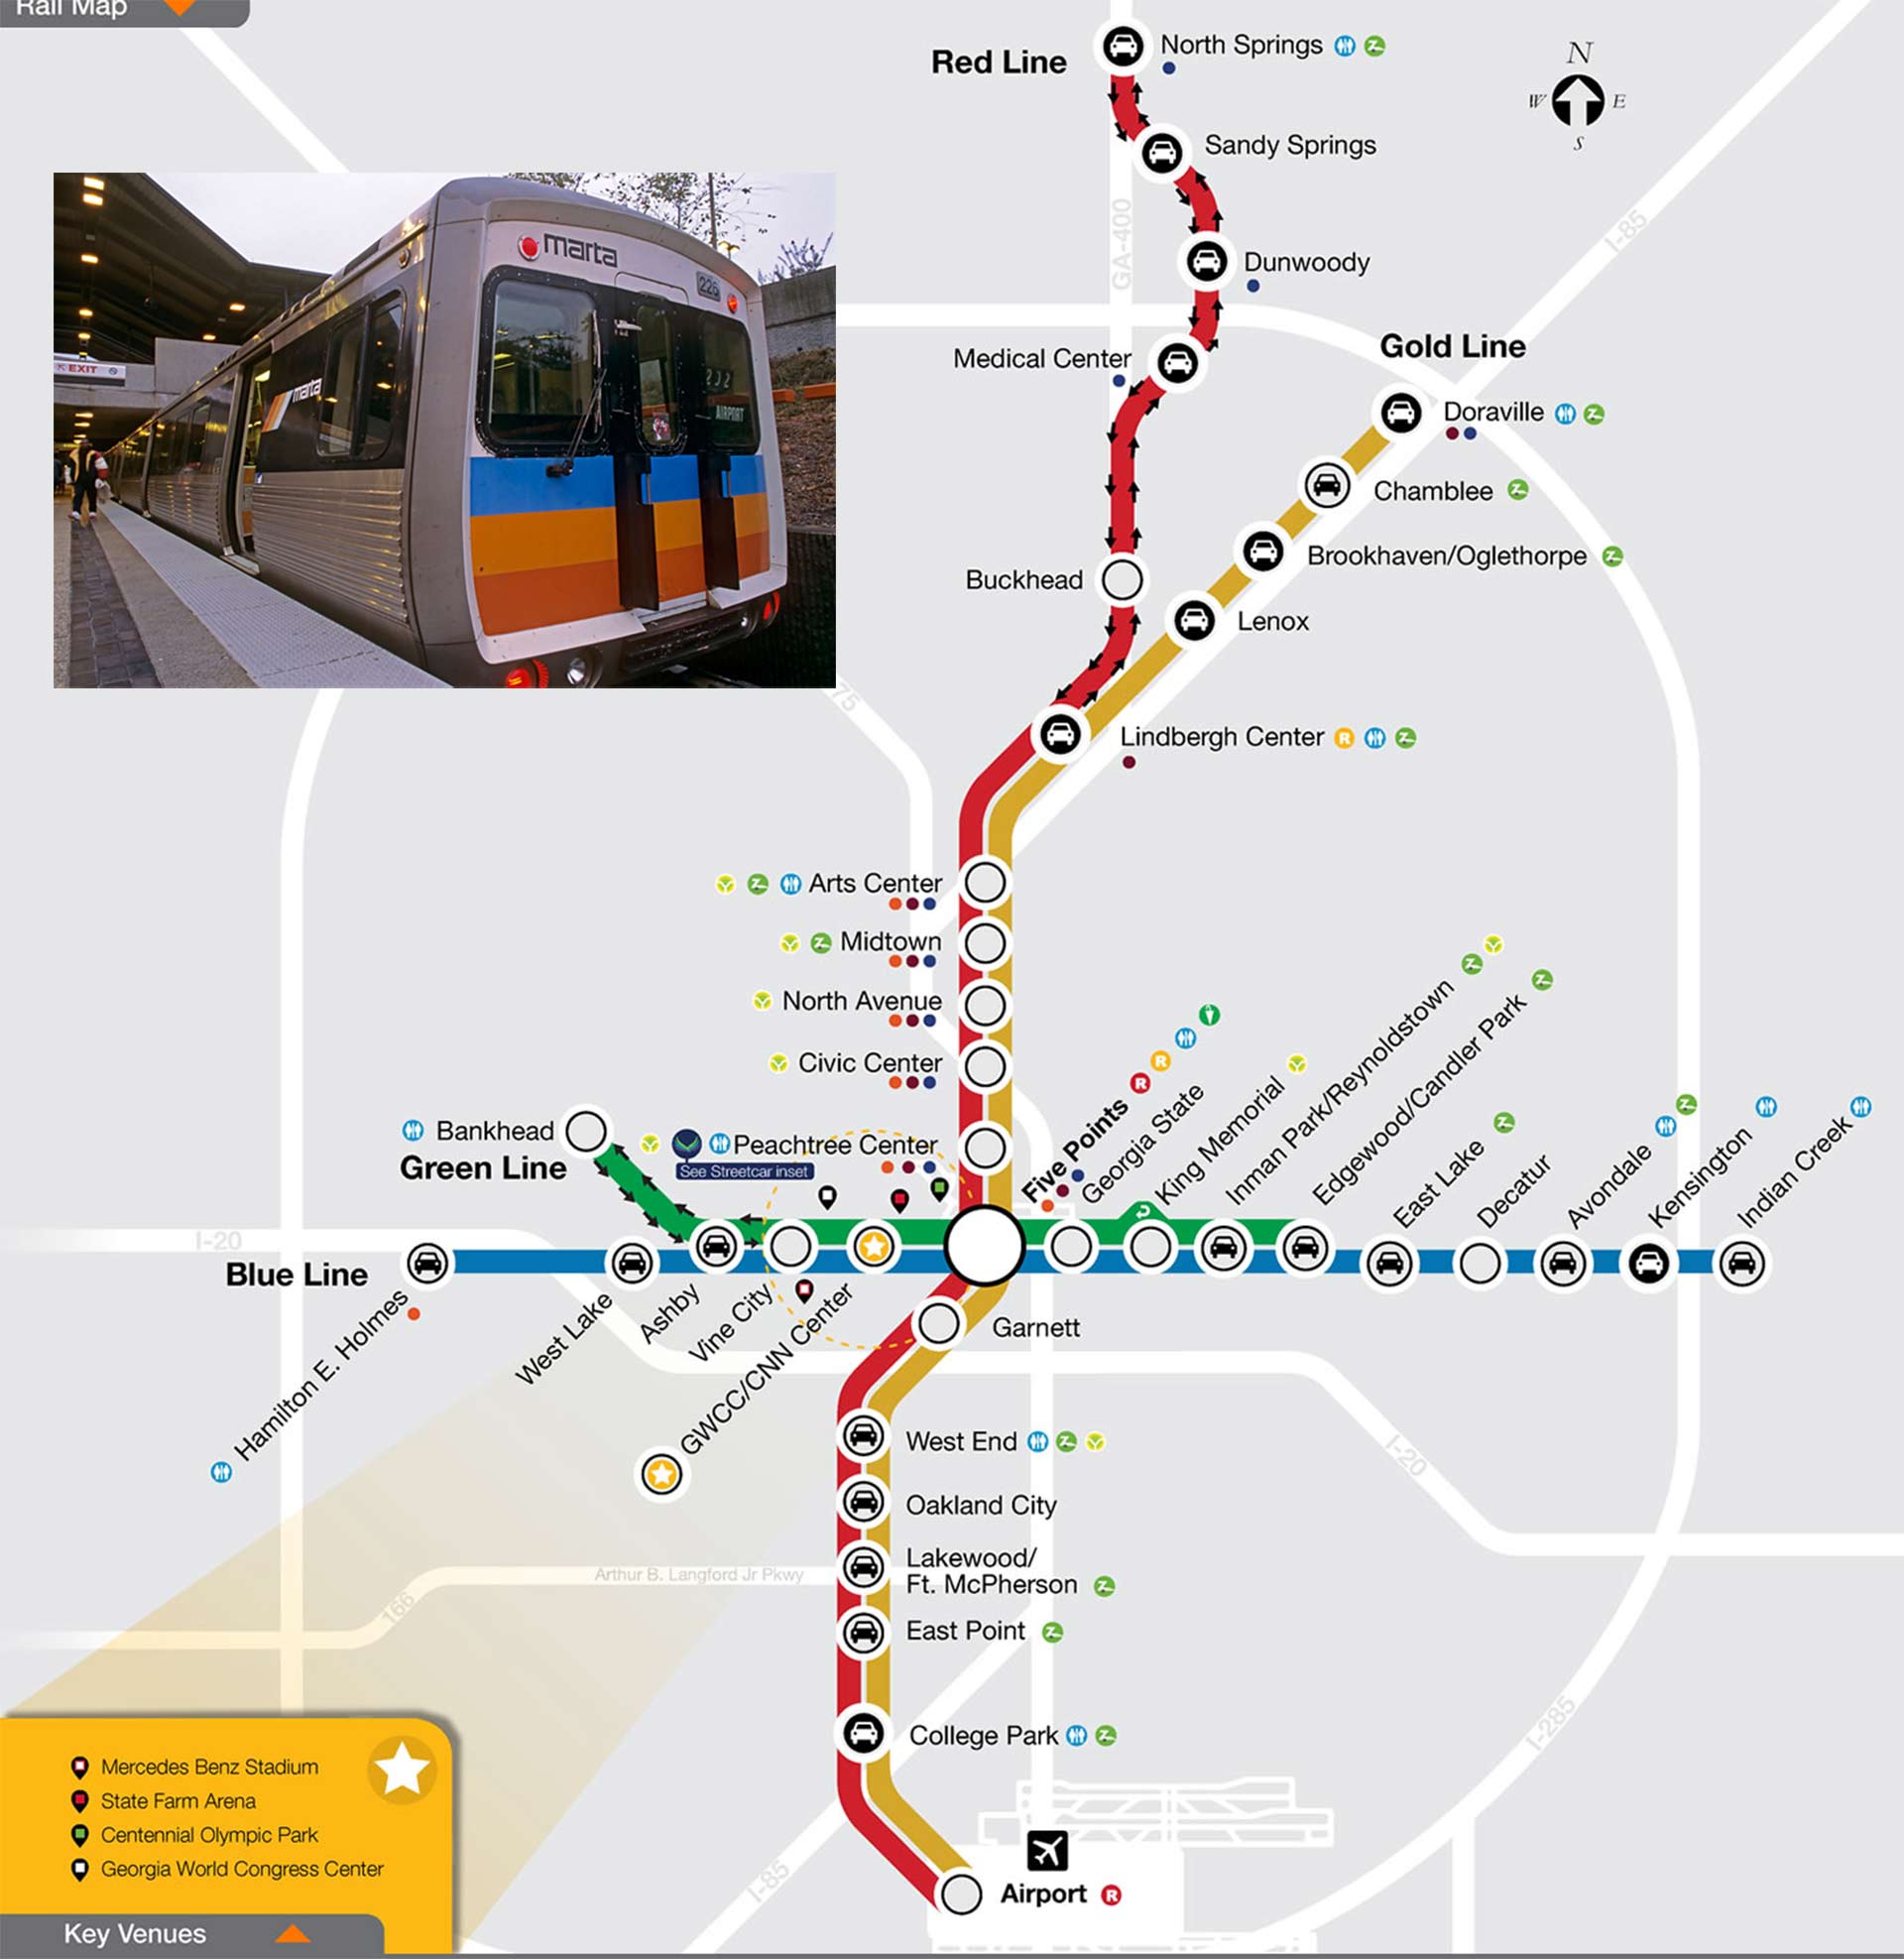 MARTA, the Metropolitan Atlanta Rapid Transit Authority